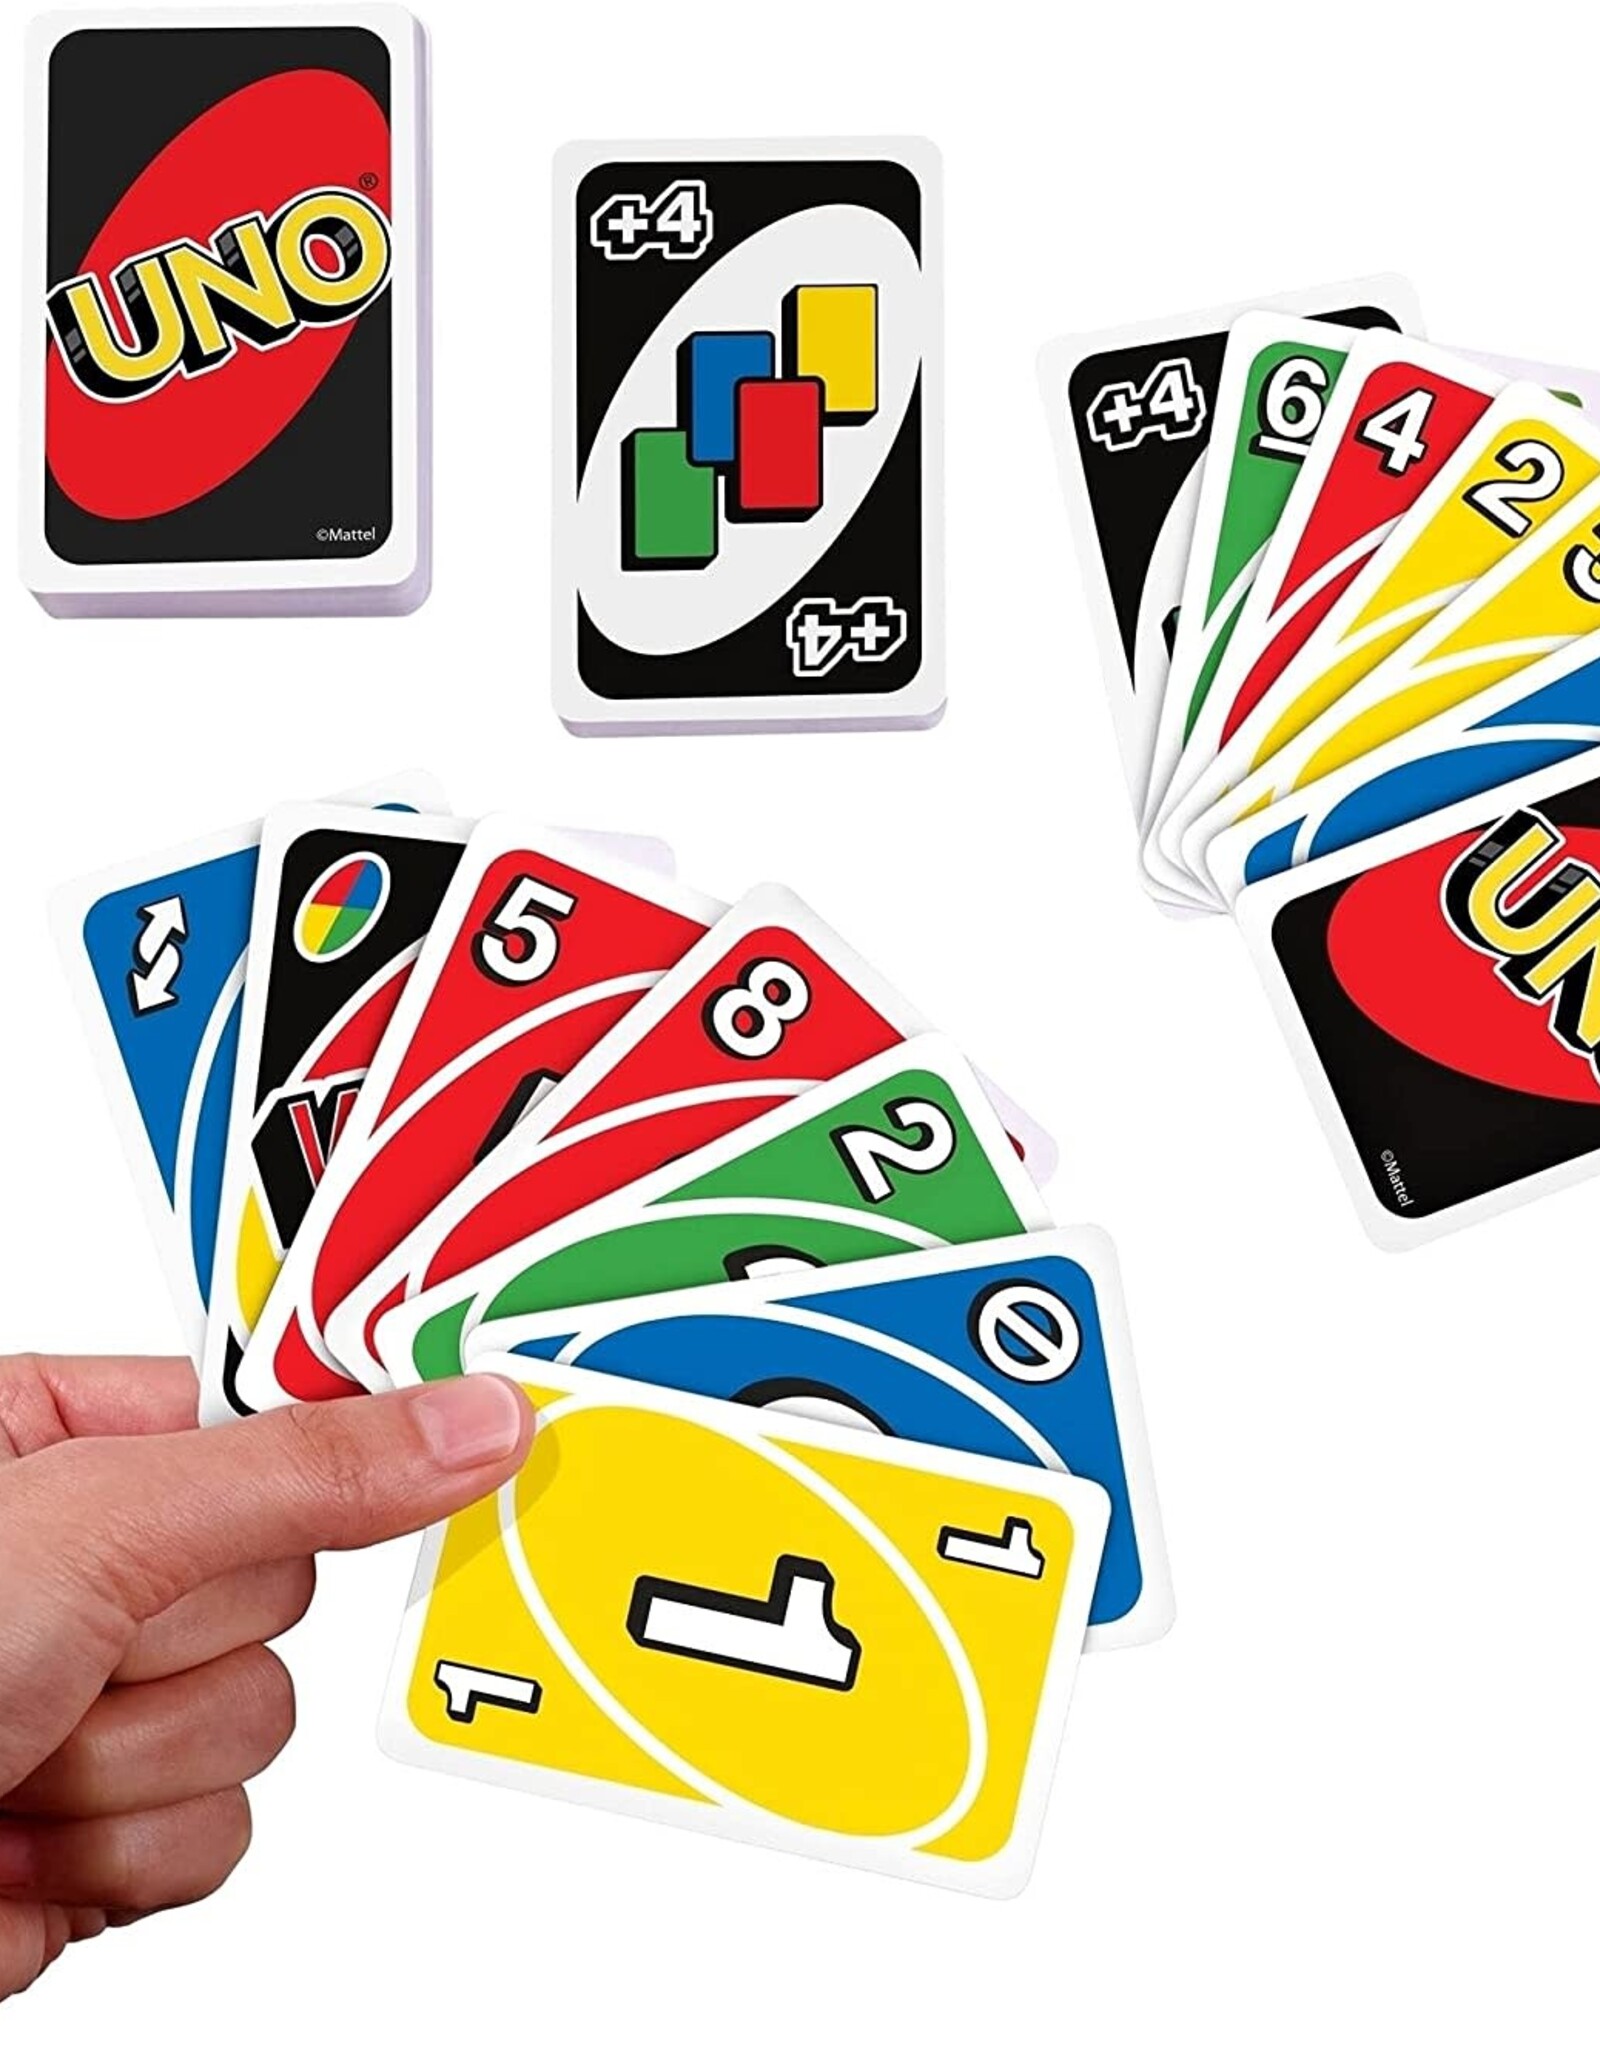 Uno Flip Card Game, Uno Dos Card Game, Mattel Game Uno, Play Uno Games